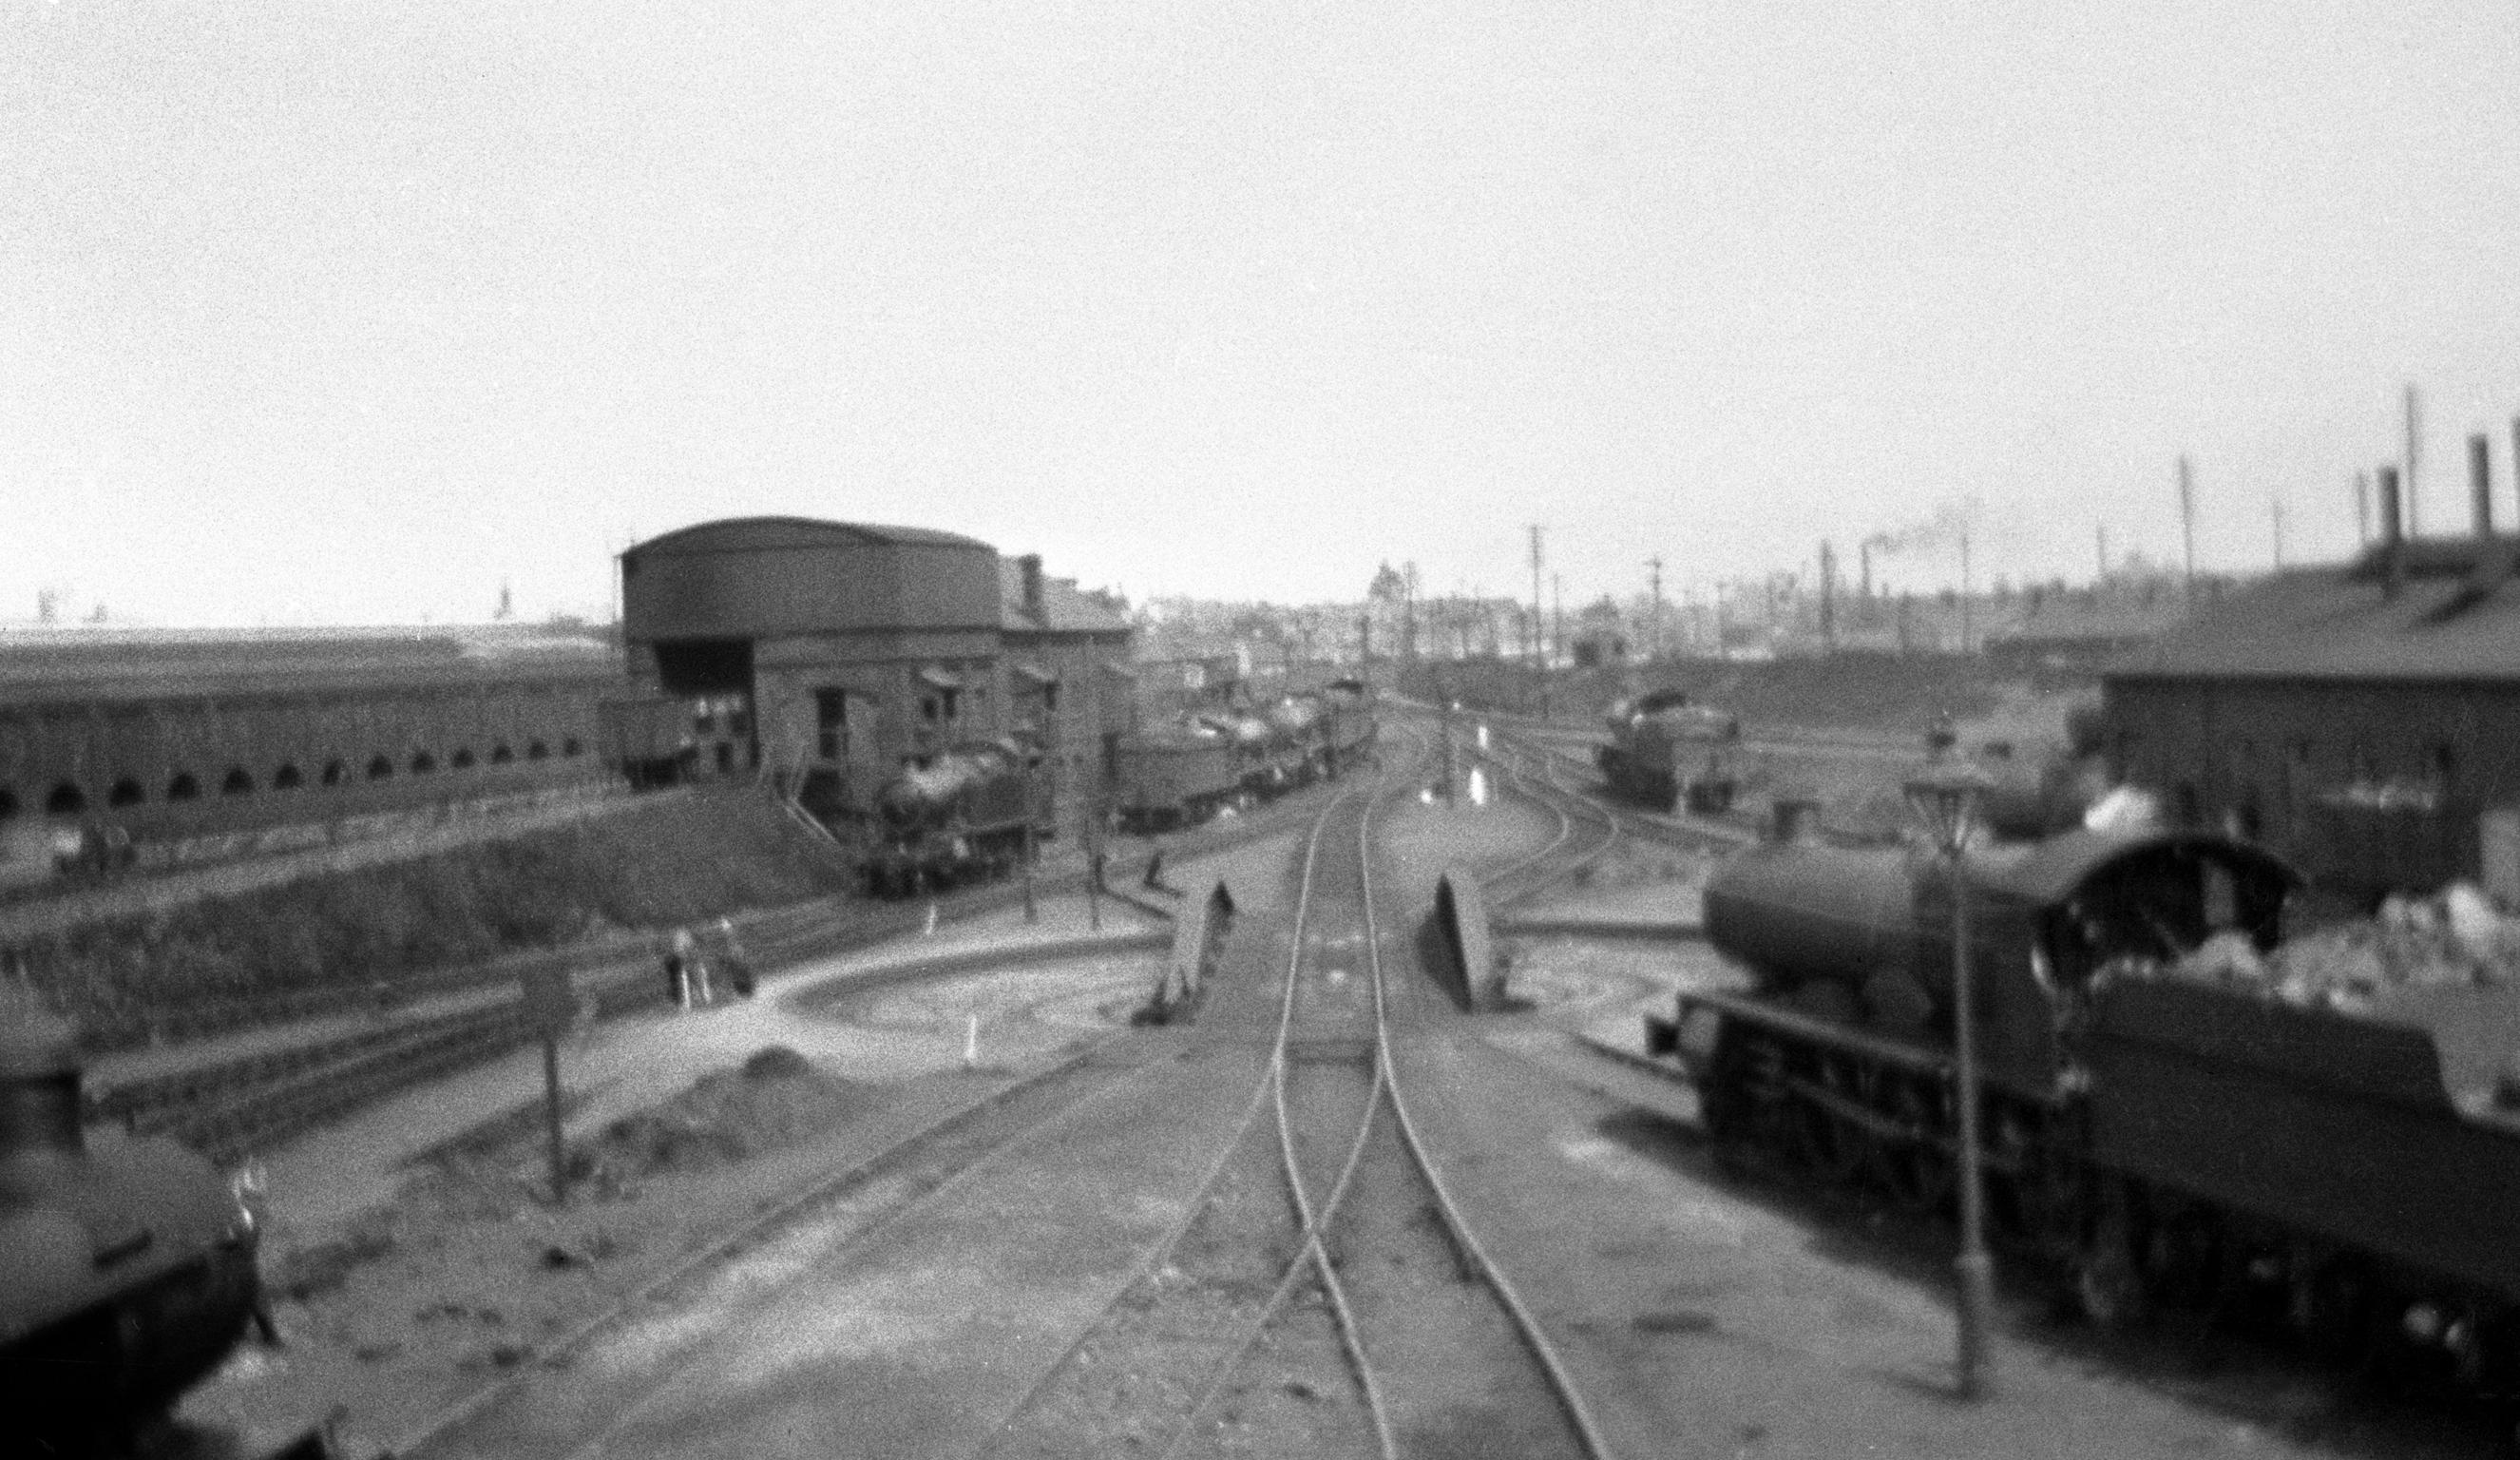 Canton locomotive yard, negative